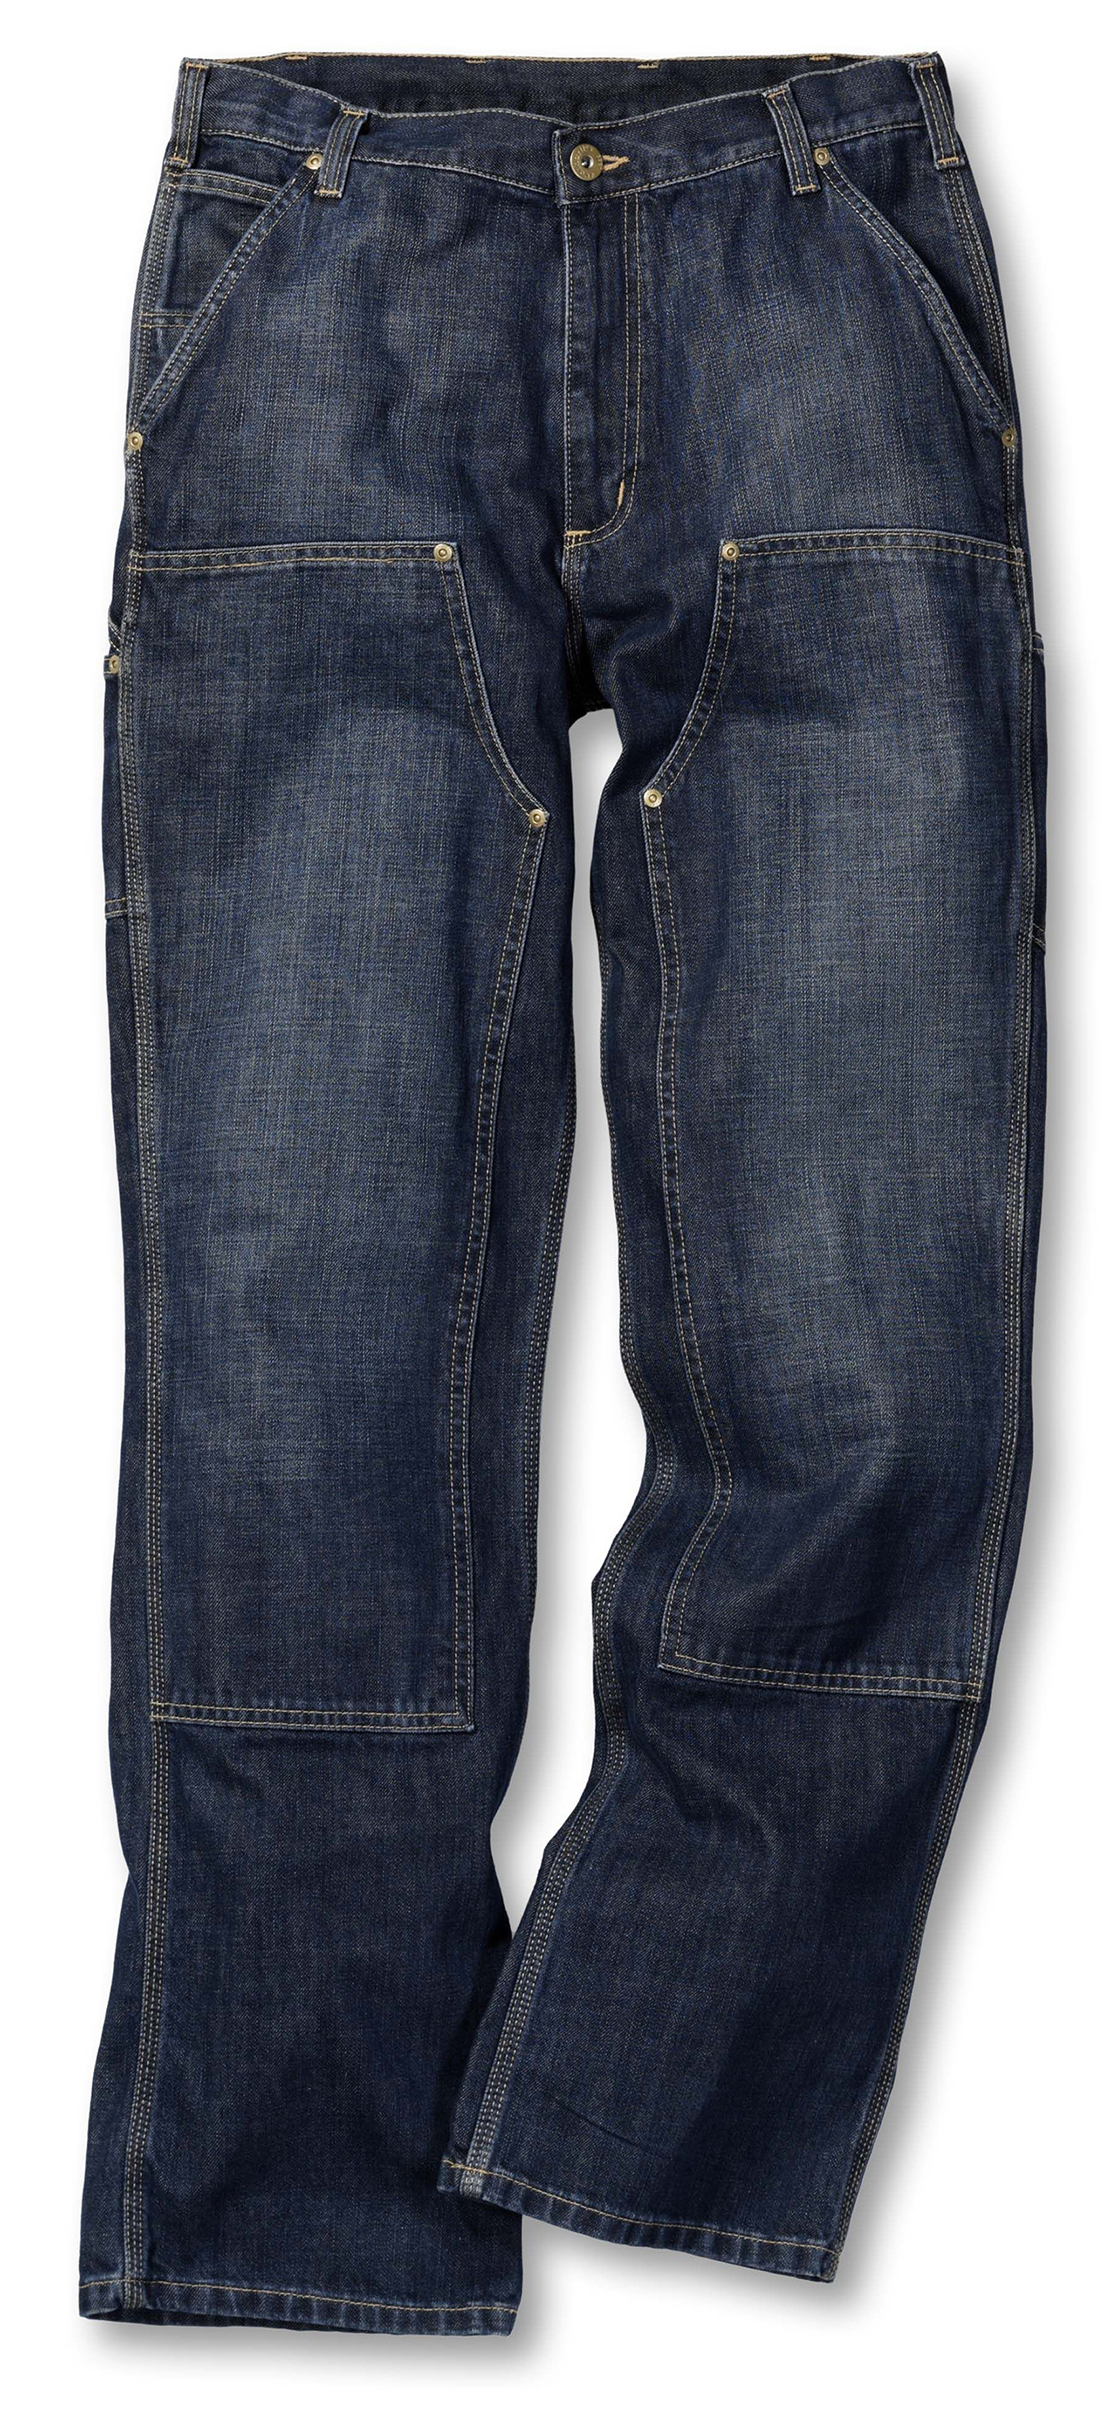 Carhartt Herren Jeans EB227, Double Front, Dunkelblau